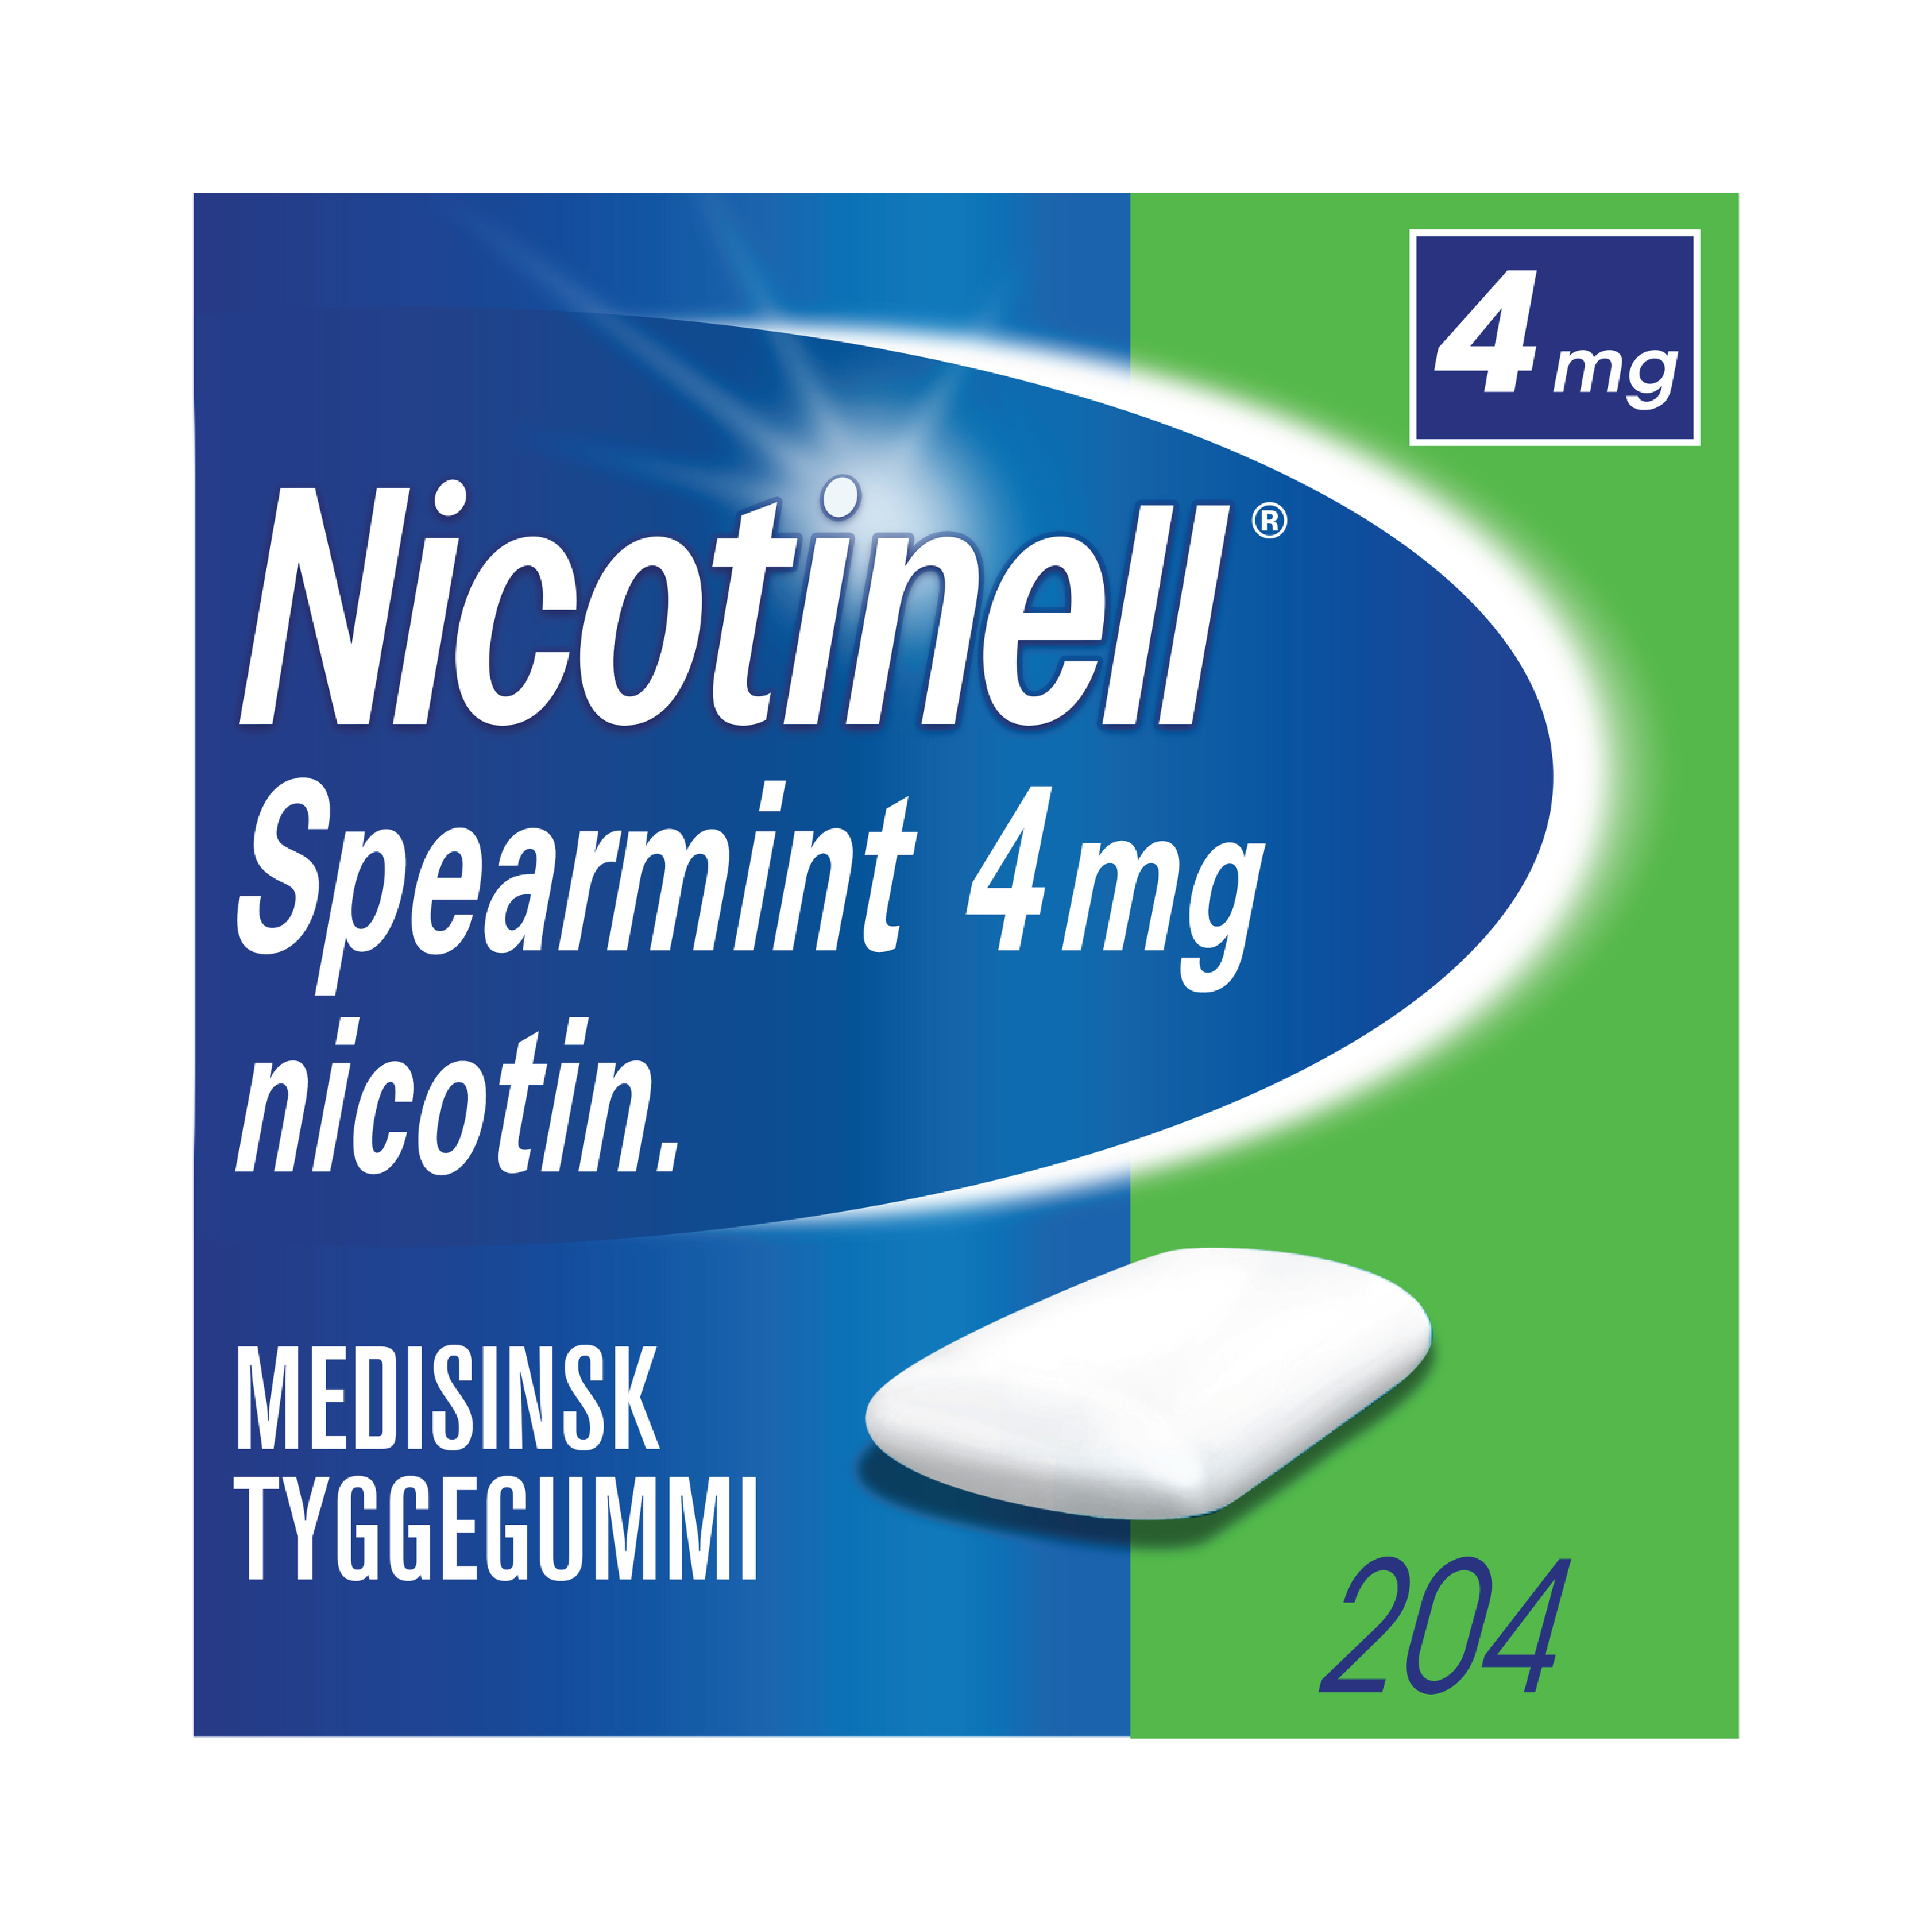 Nicotinell Tyggegummi 4mg spearmint, 204 stk.